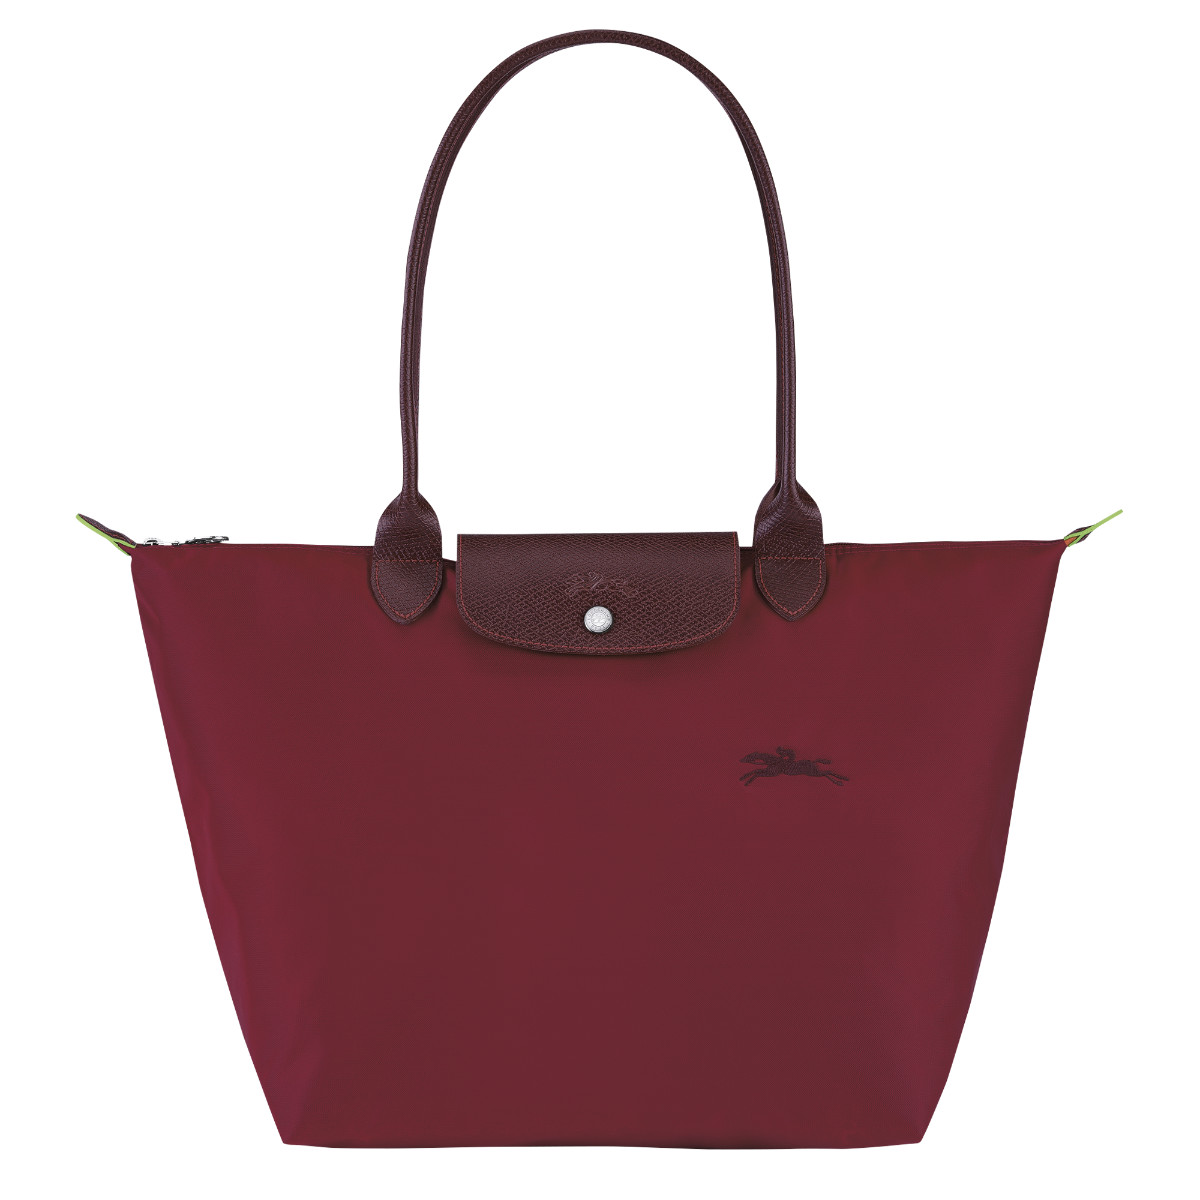 Longchamp: “It Is Not A Bag. It Is Le Pliage®” - Luxferity